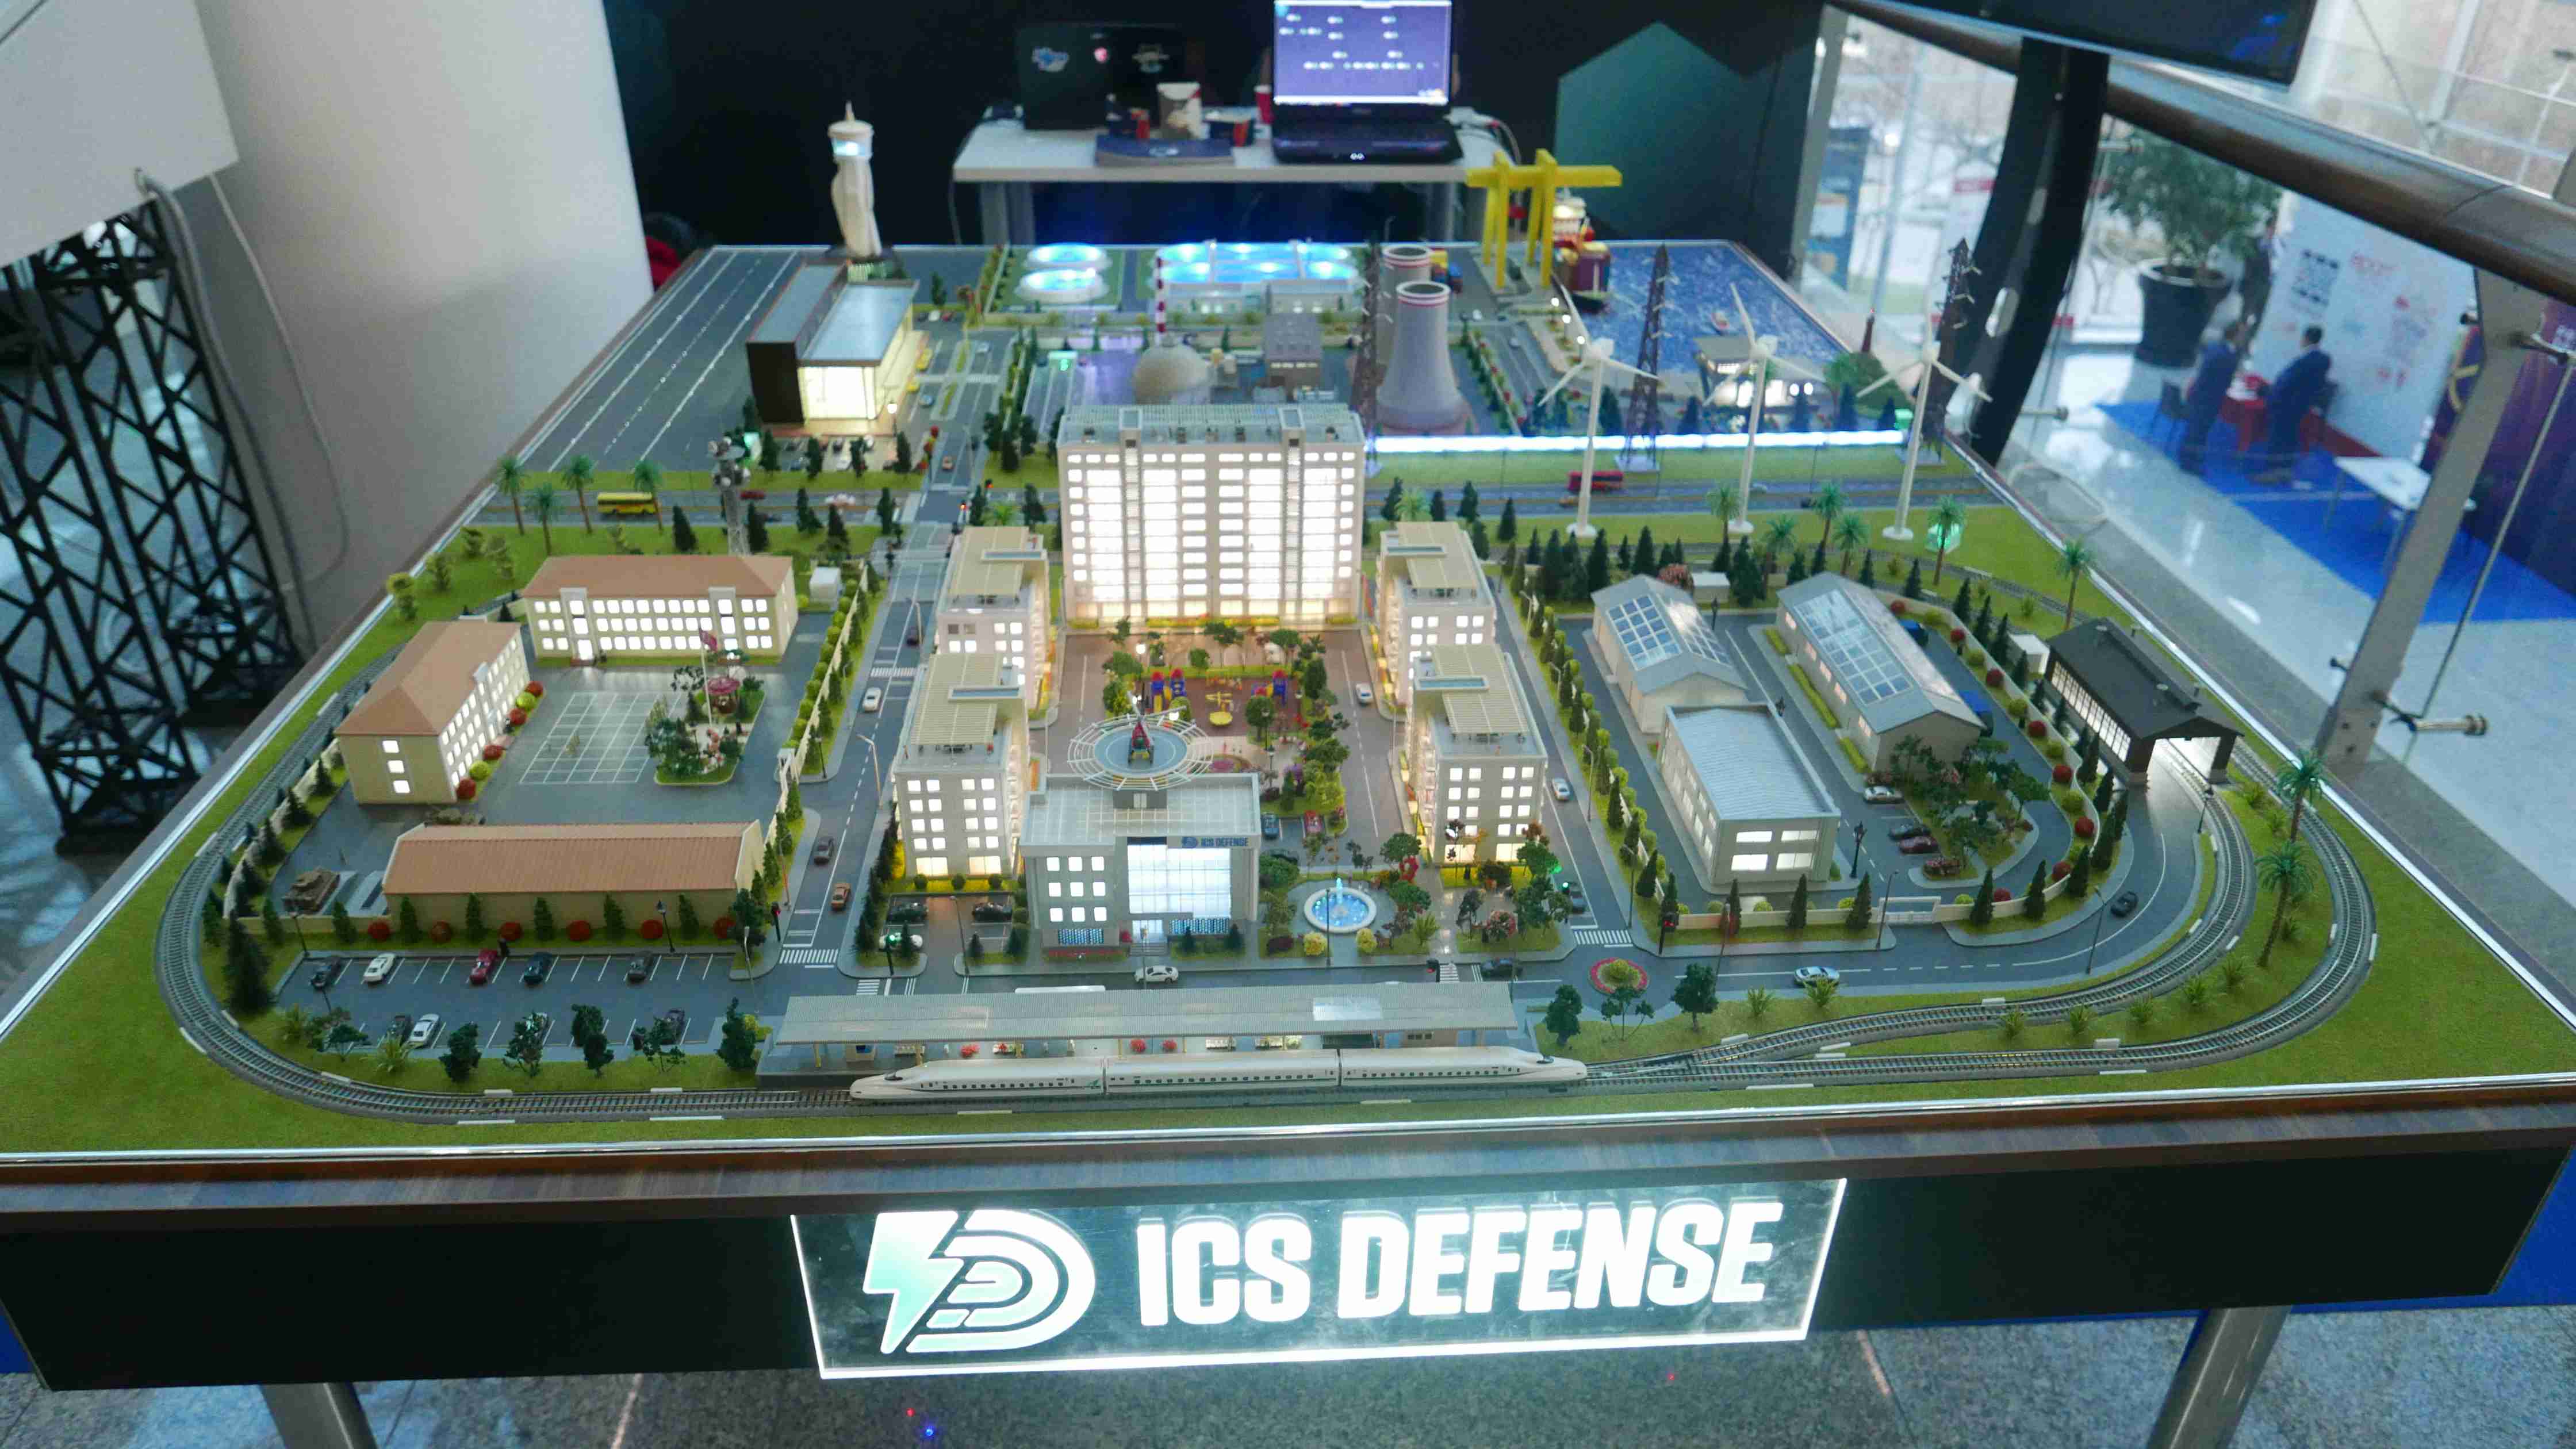 Savunma sanayii firmalarından; ICS Defense